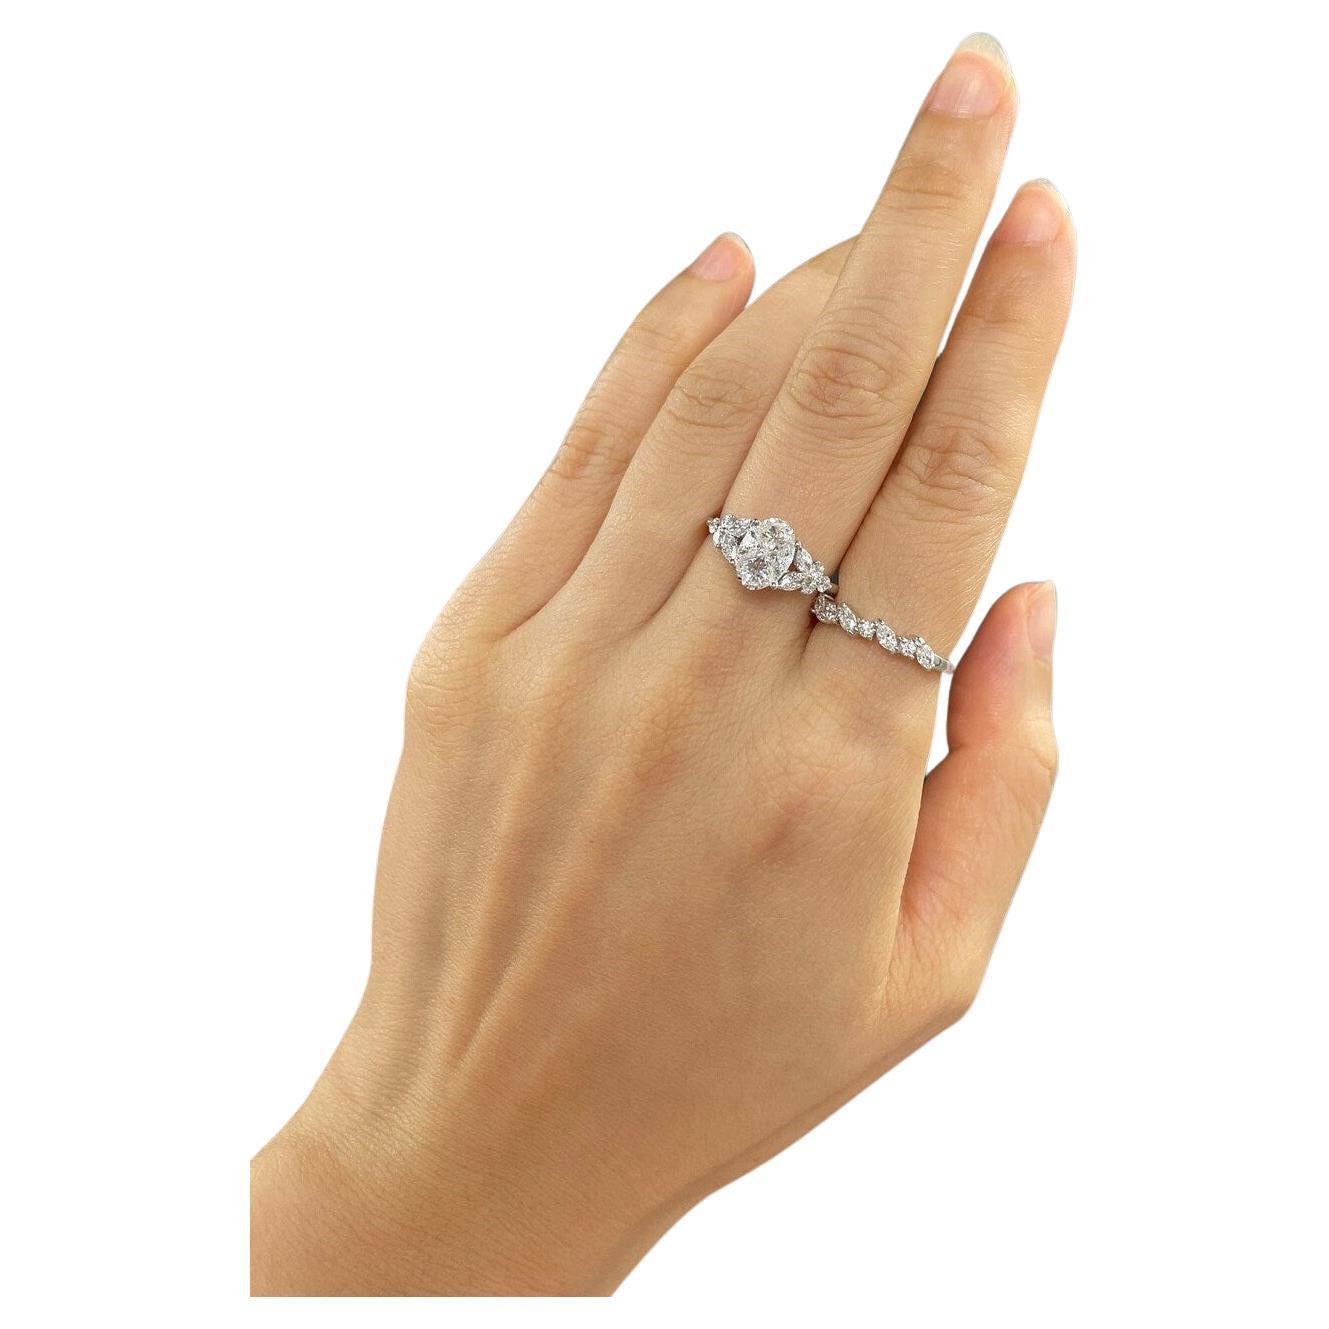 For Sale:  Pie Cut Diamond Ring, Illusion Diamond Ring, Oval Diamond Ring, Unique Engagemen